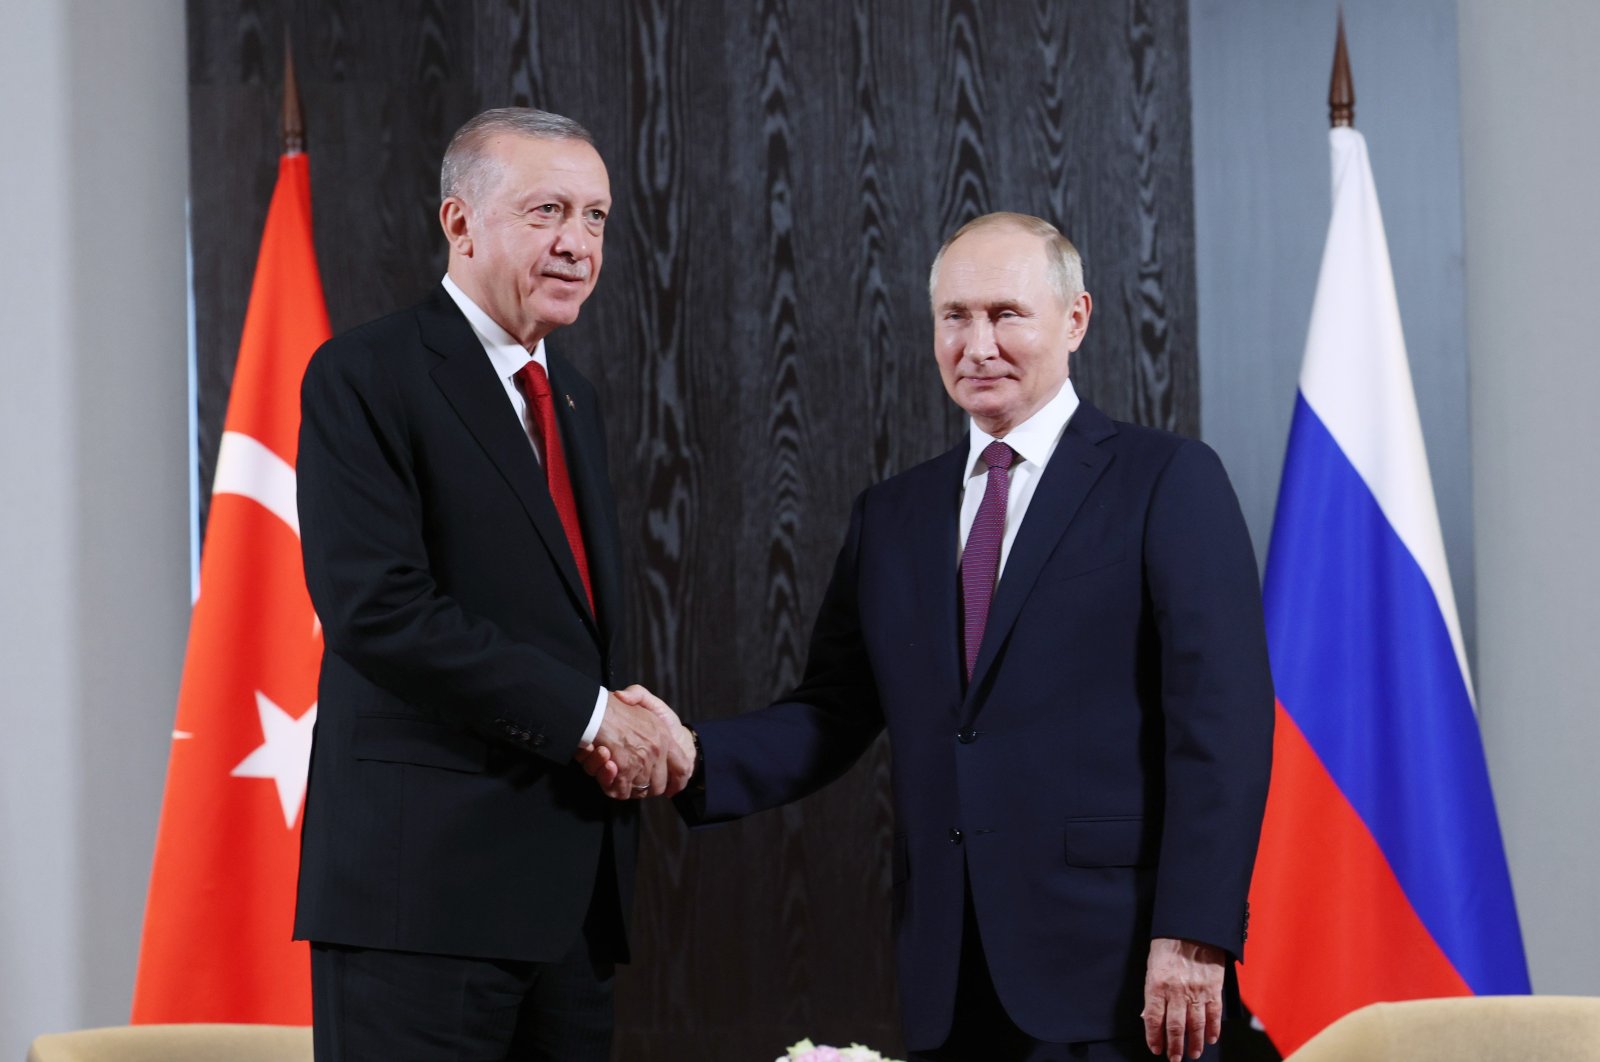 Erdoğan, Putin agree on Türkiye visit as grain deal remains in limbo